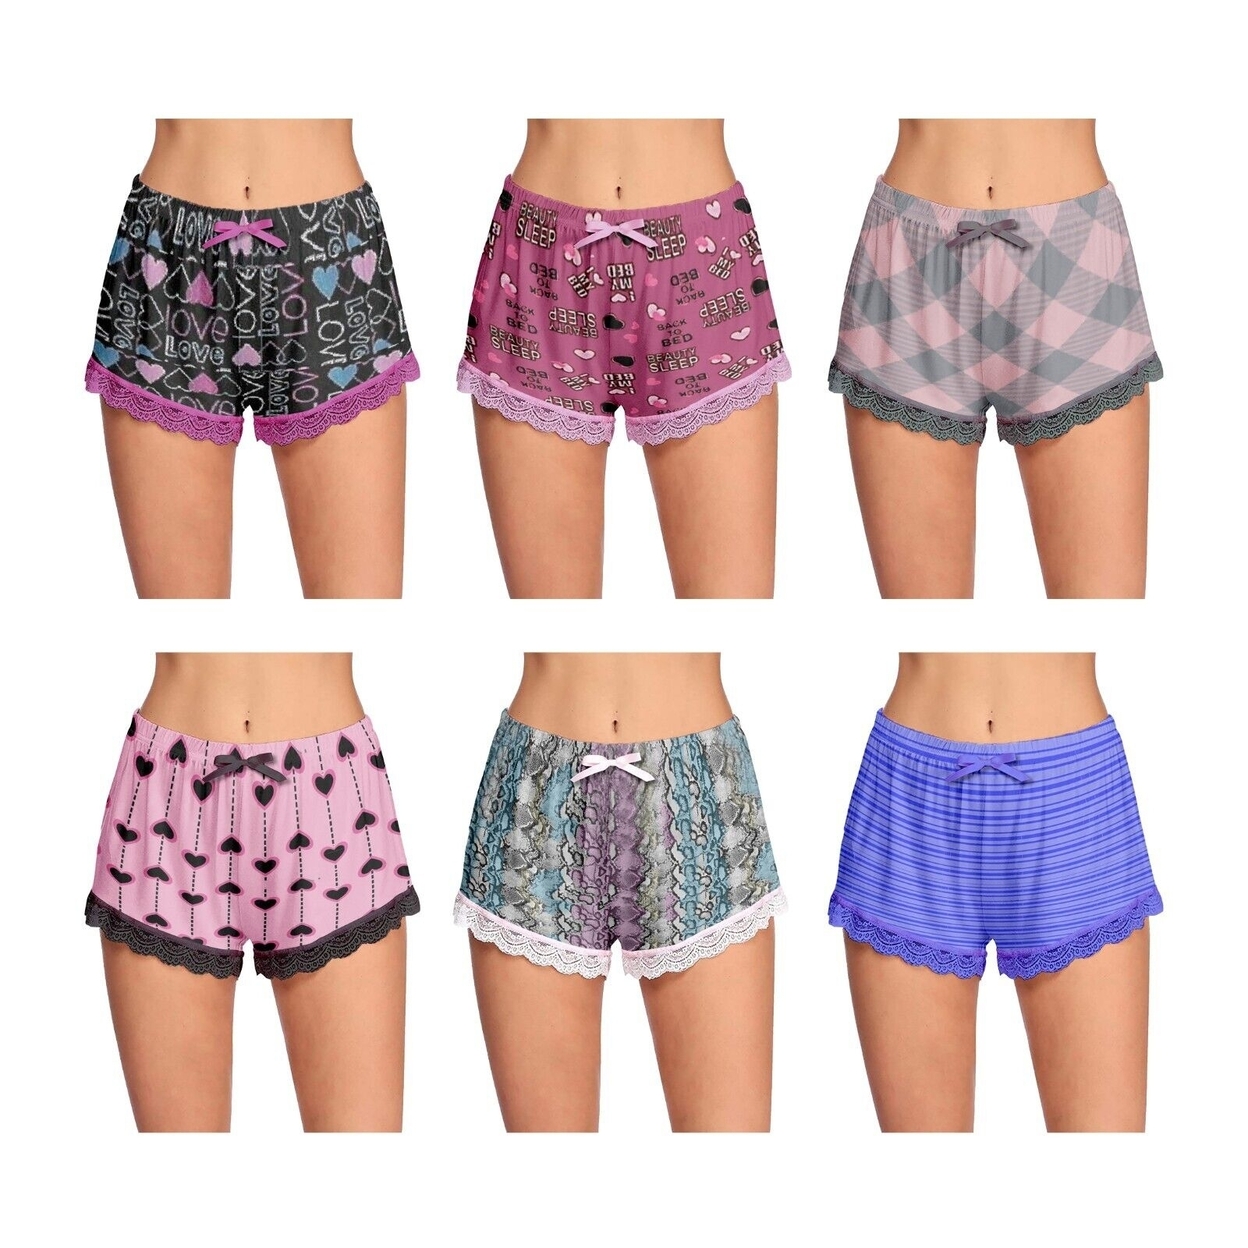 4-Pack: Women's Ultra-Soft Cozy Fun Printed Lace Trim Pajama Lounge Shorts - Medium, Love